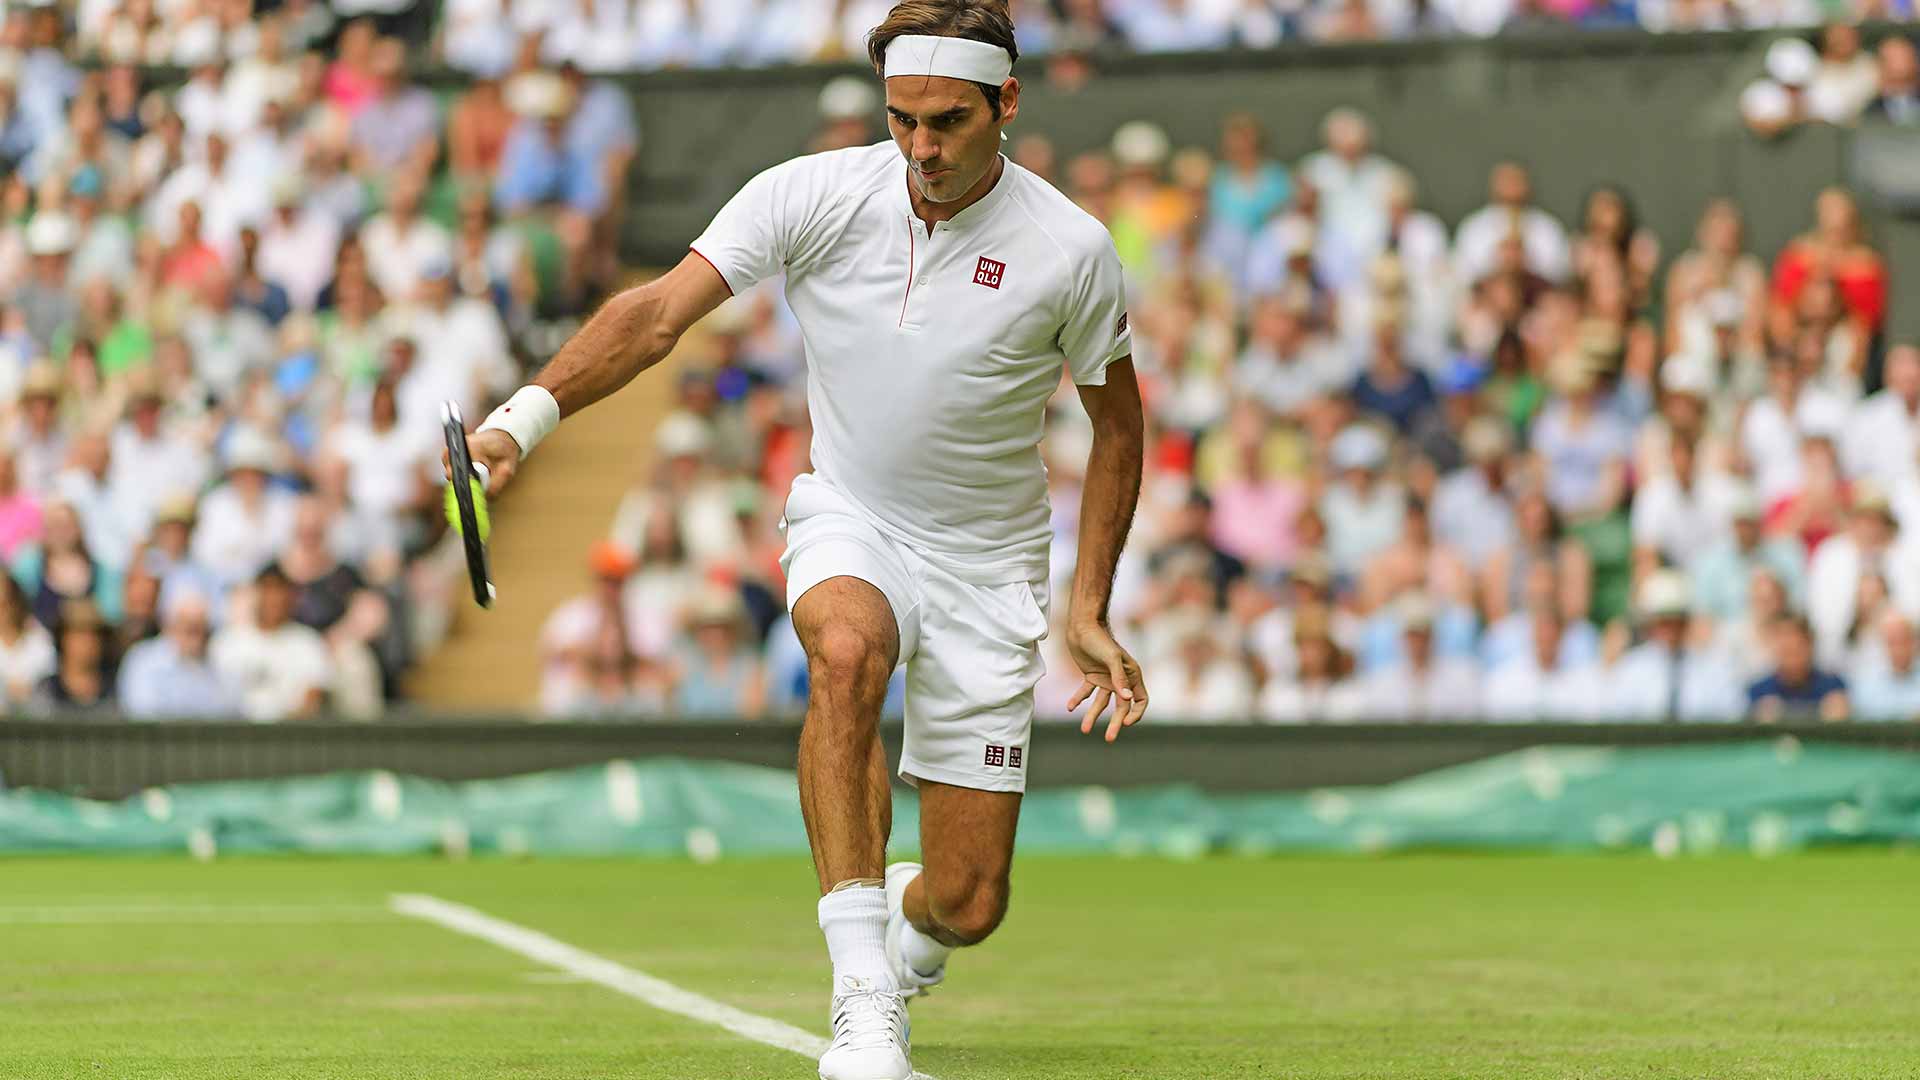 2021 Uniqlo Roger Federer Wimbledon The Championship  Model 